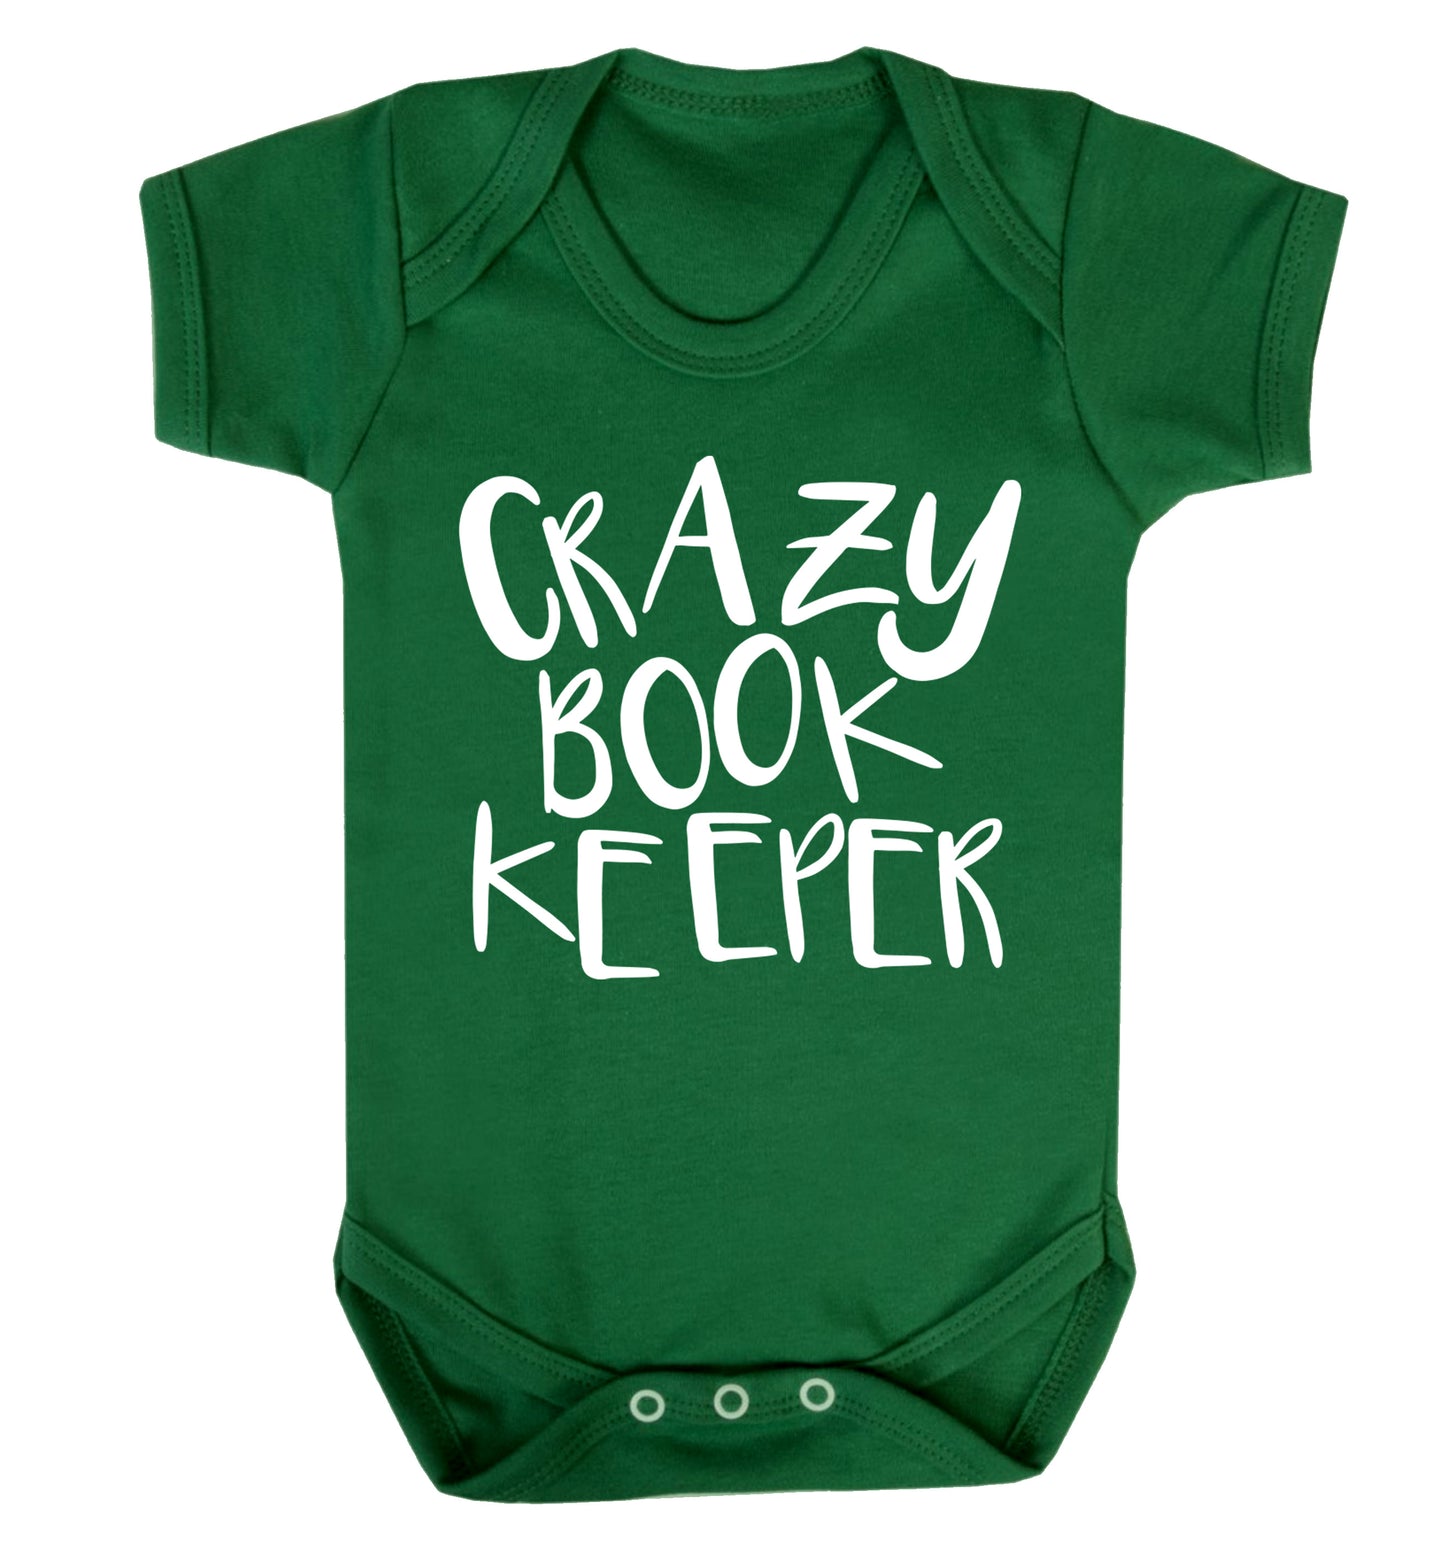 Crazy bookkeeper Baby Vest green 18-24 months